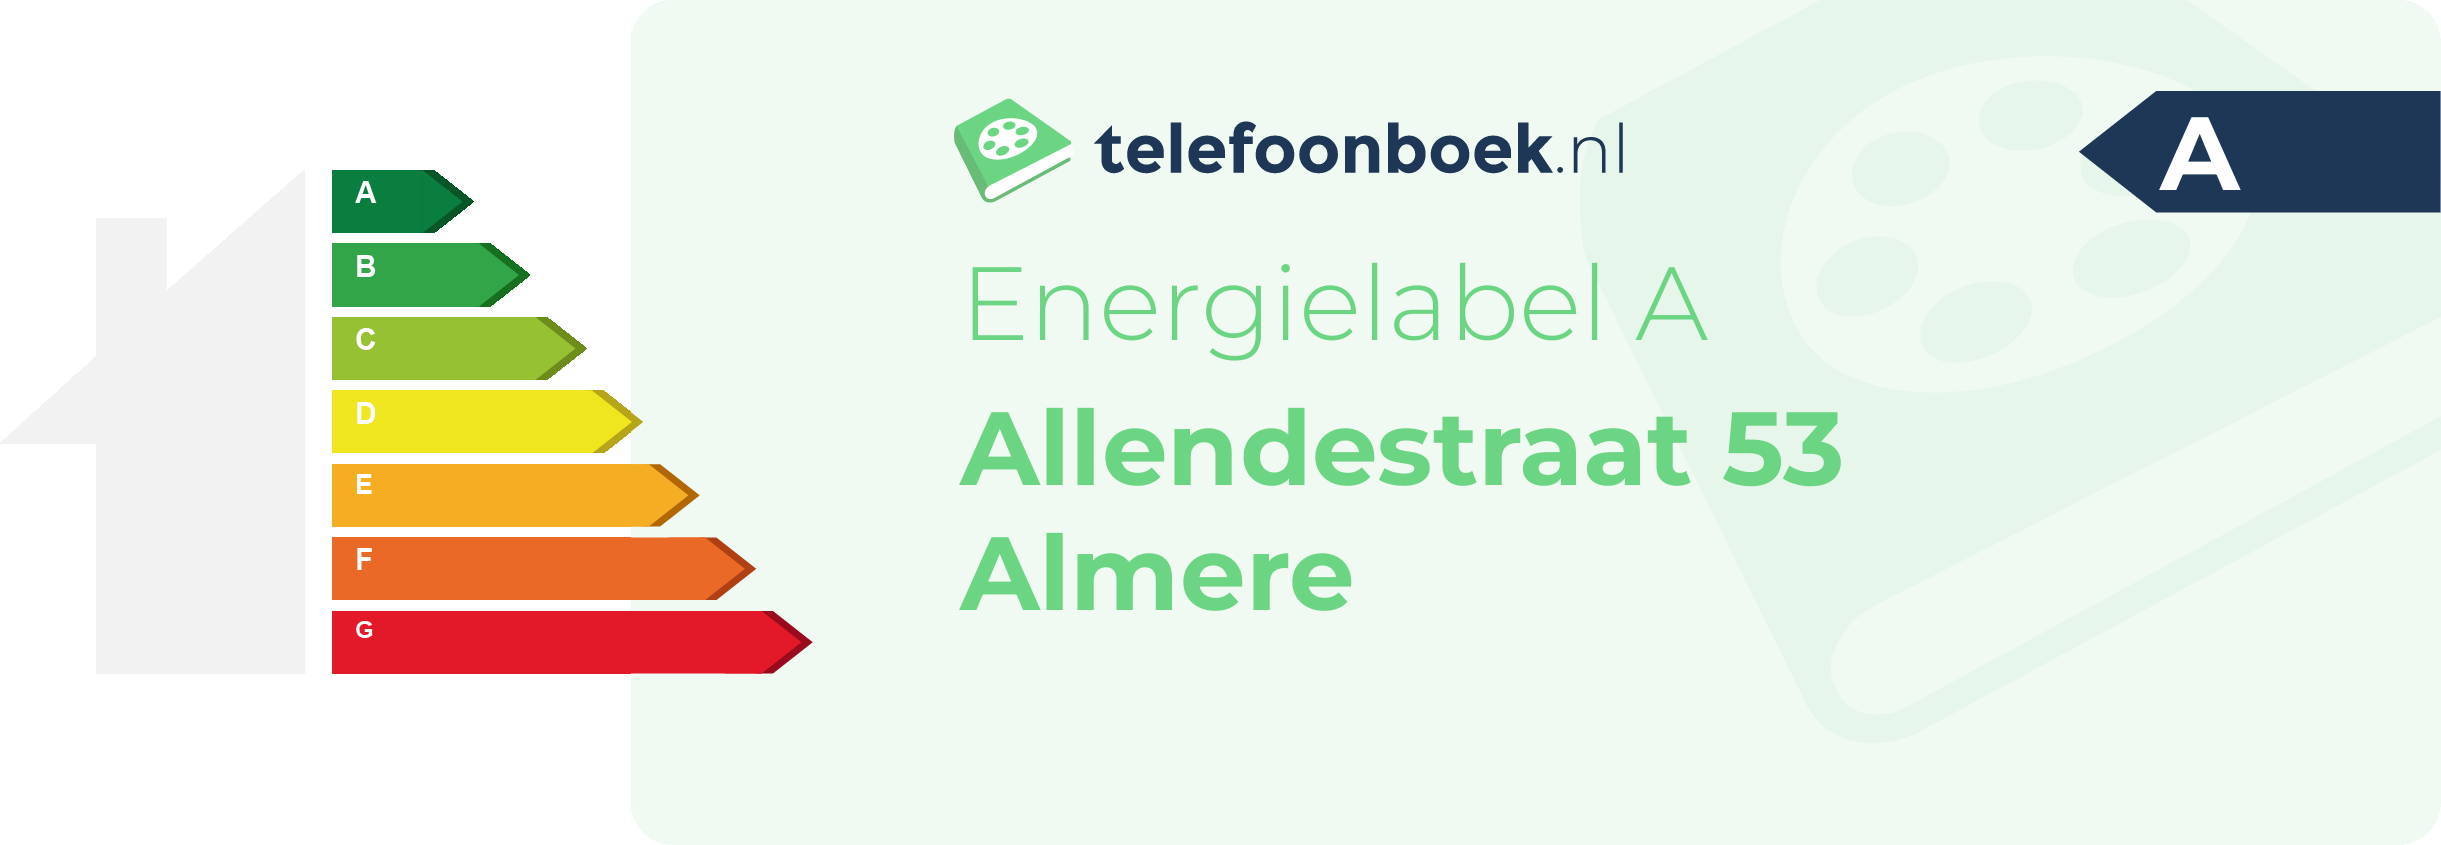 Energielabel Allendestraat 53 Almere